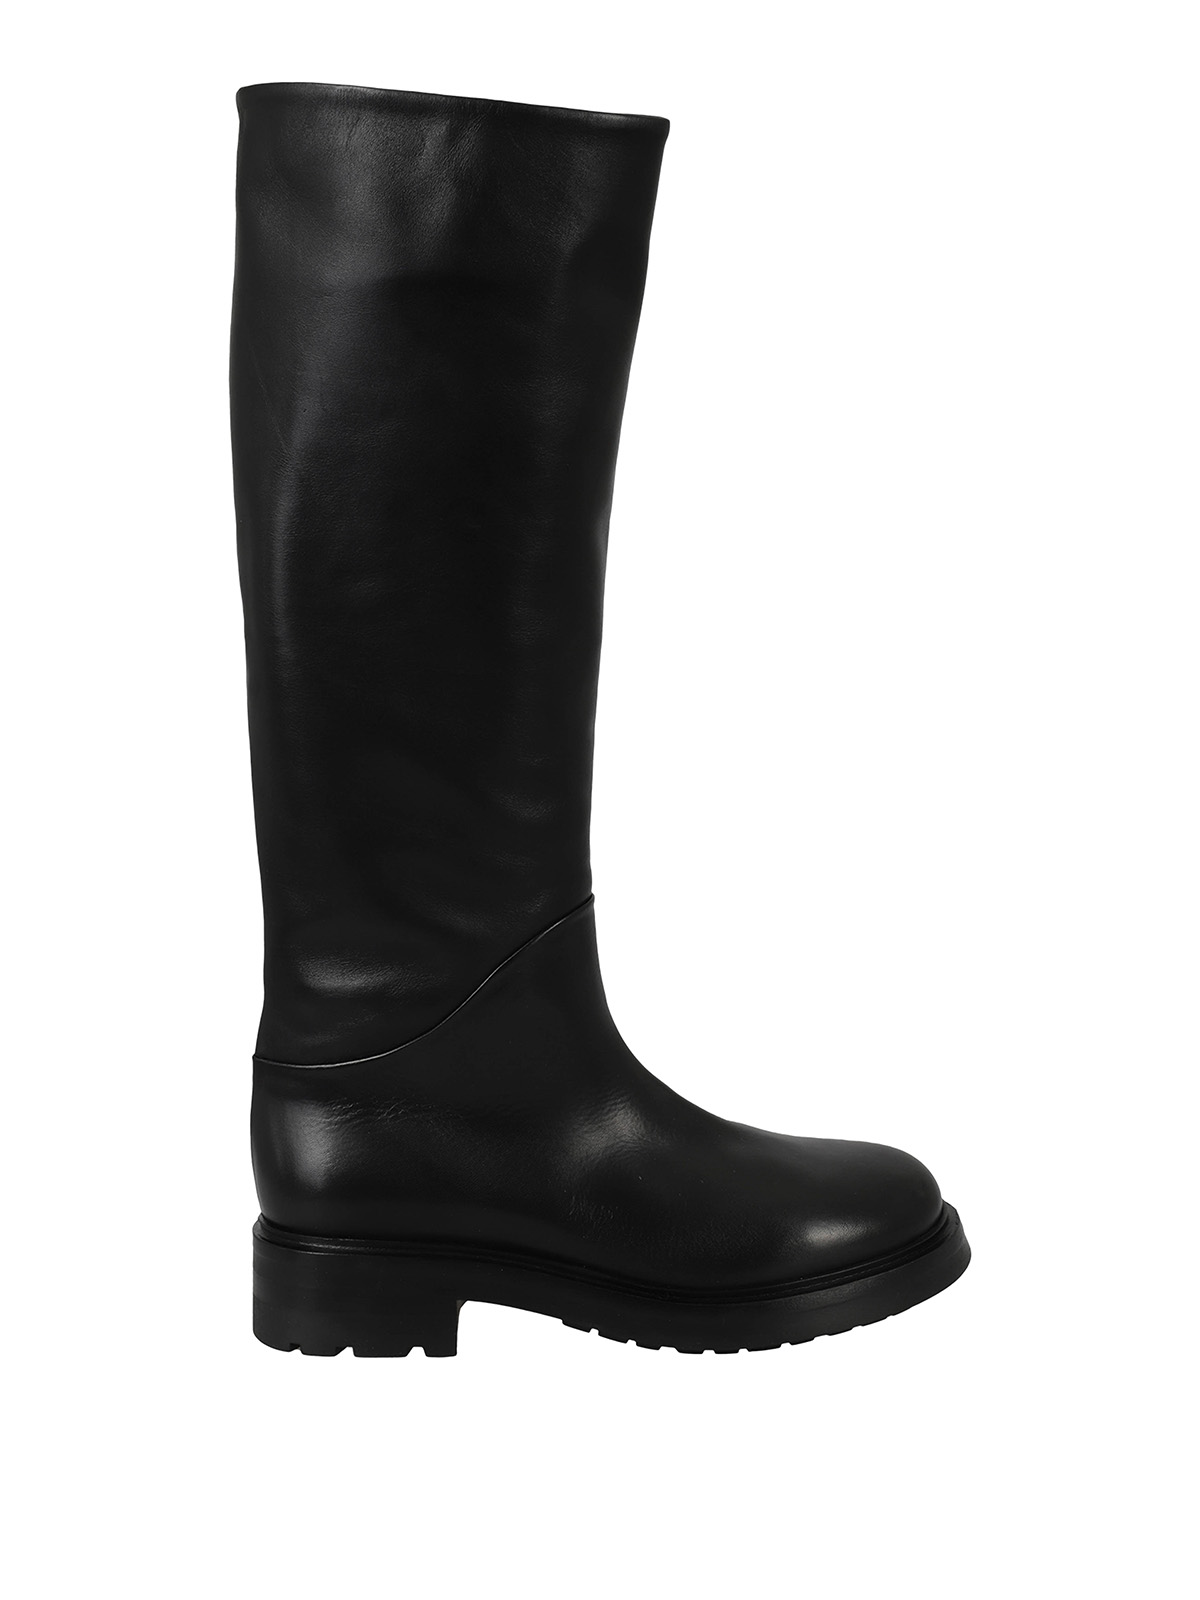 Boots Elena Iachi - Leather boots - A5002BLK | Shop online at iKRIX